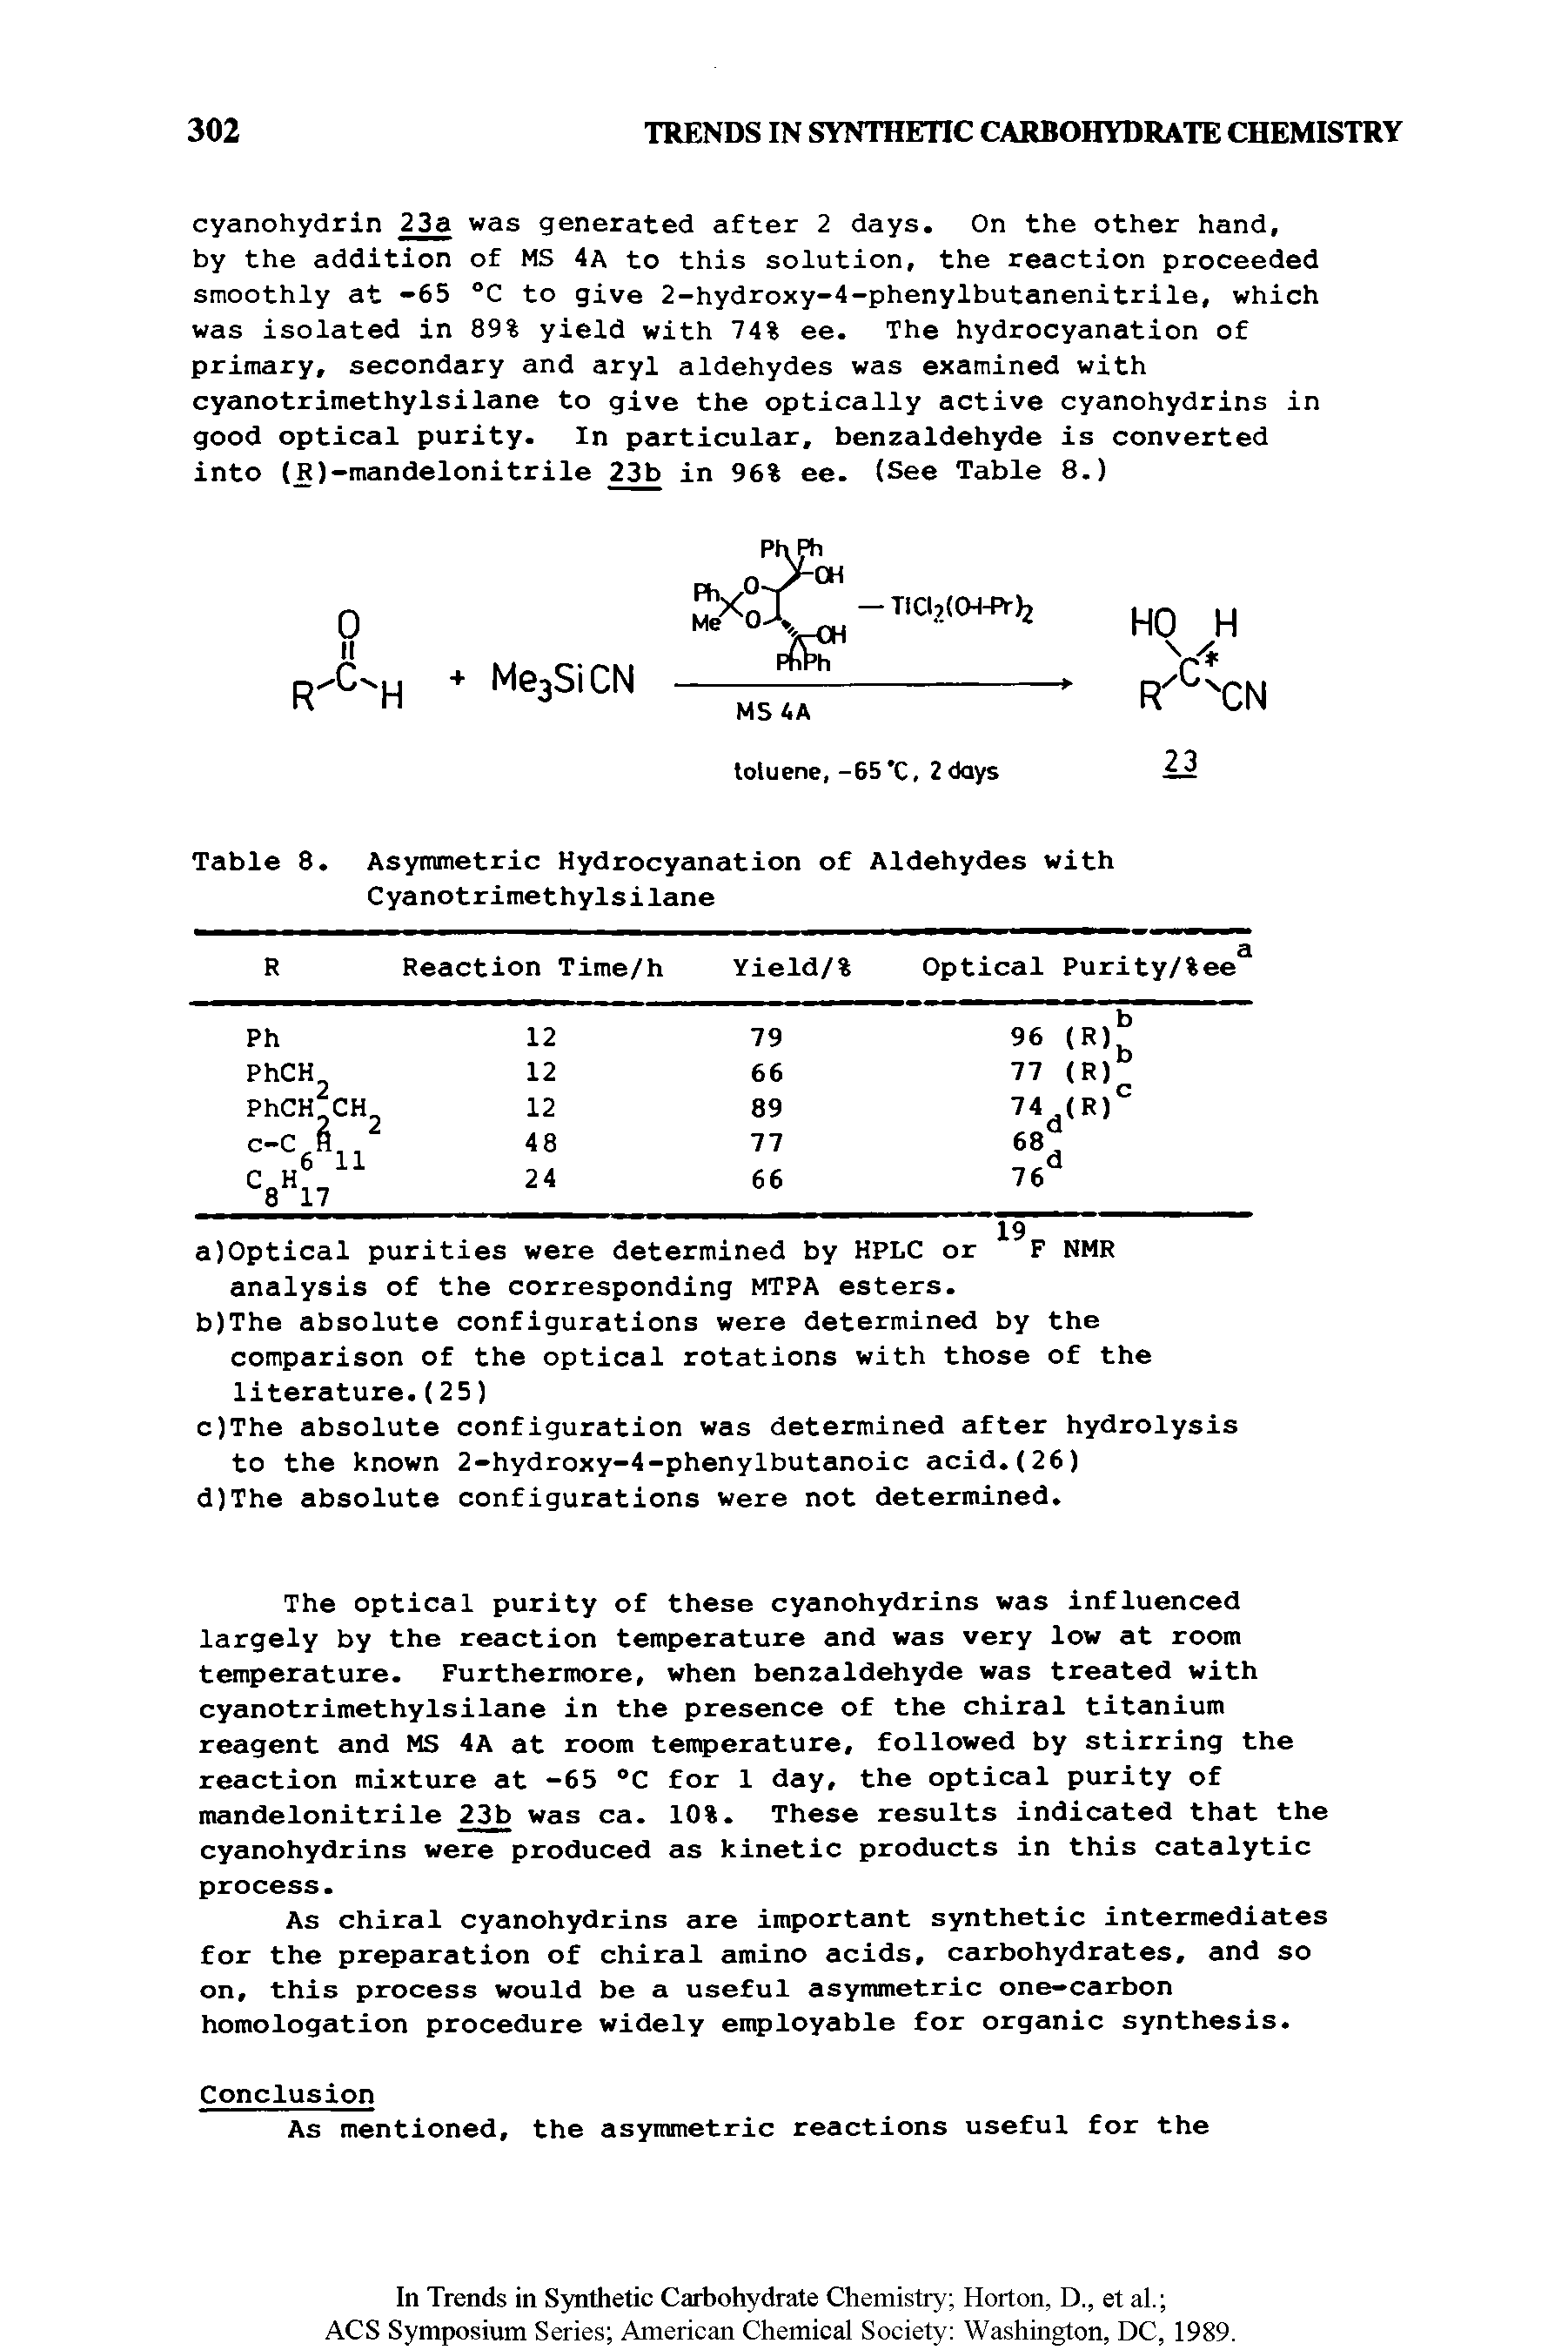 Table 8. Asymmetric Hydrocyanation of Aldehydes with Cyanotrimethylsilane...